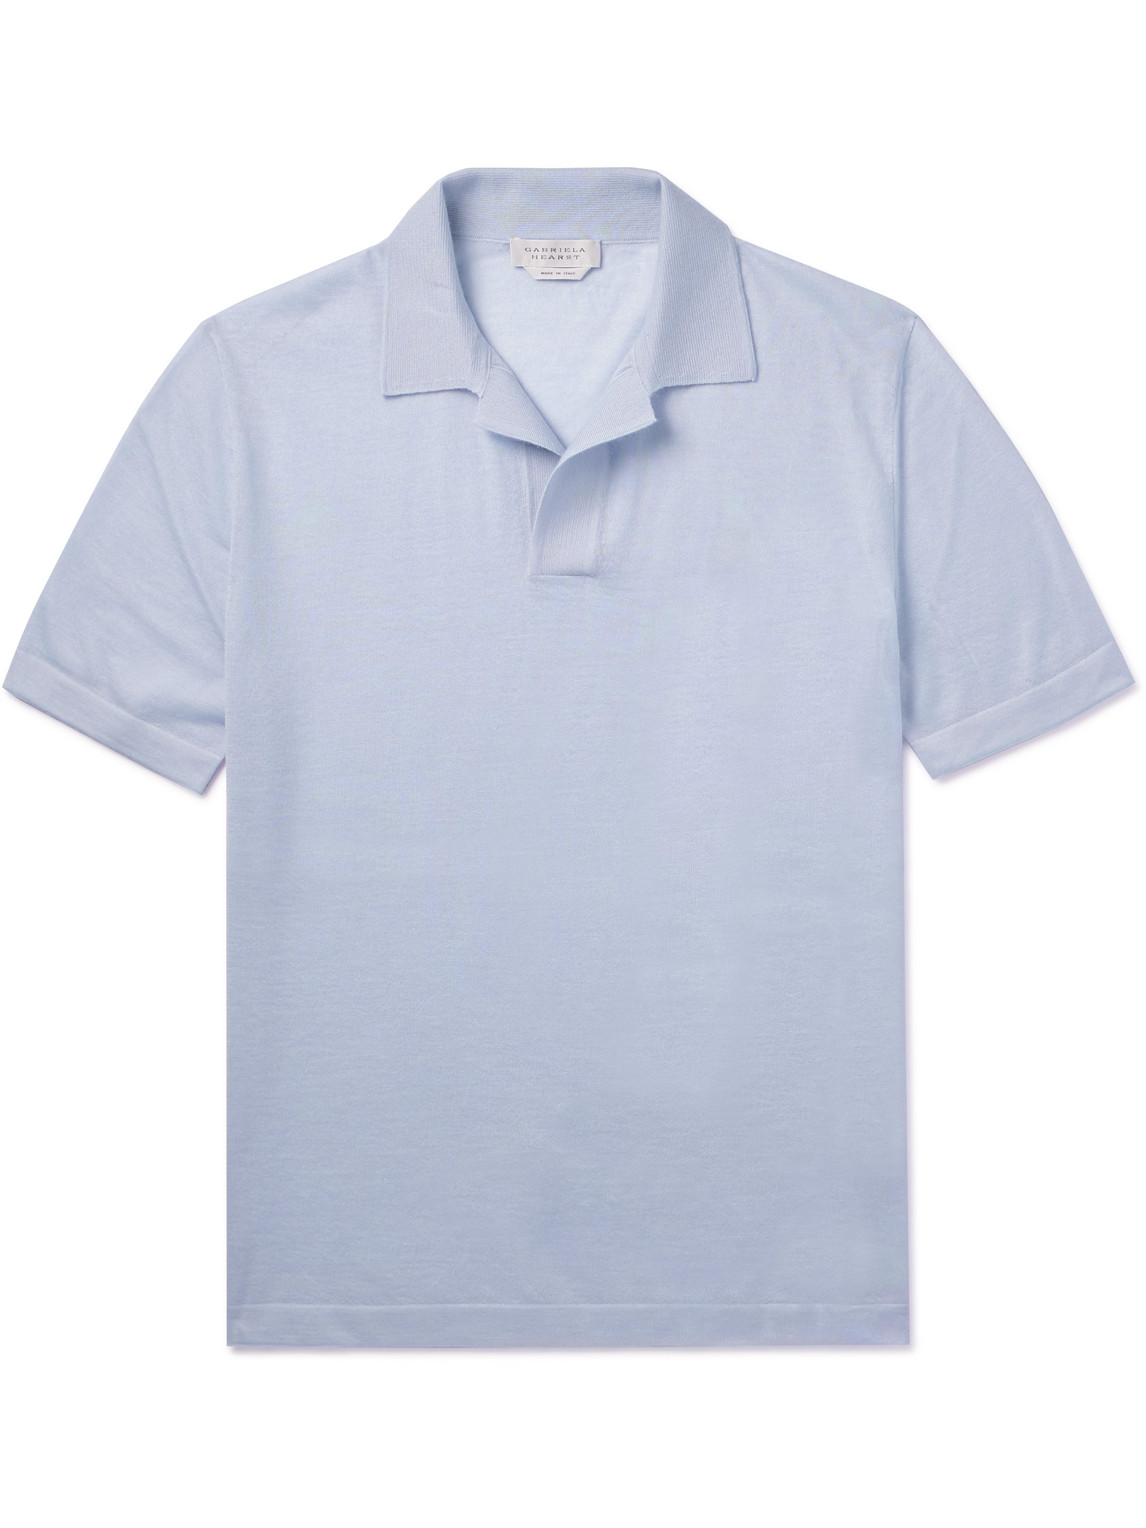 Stendhal Cashmere Polo Shirt